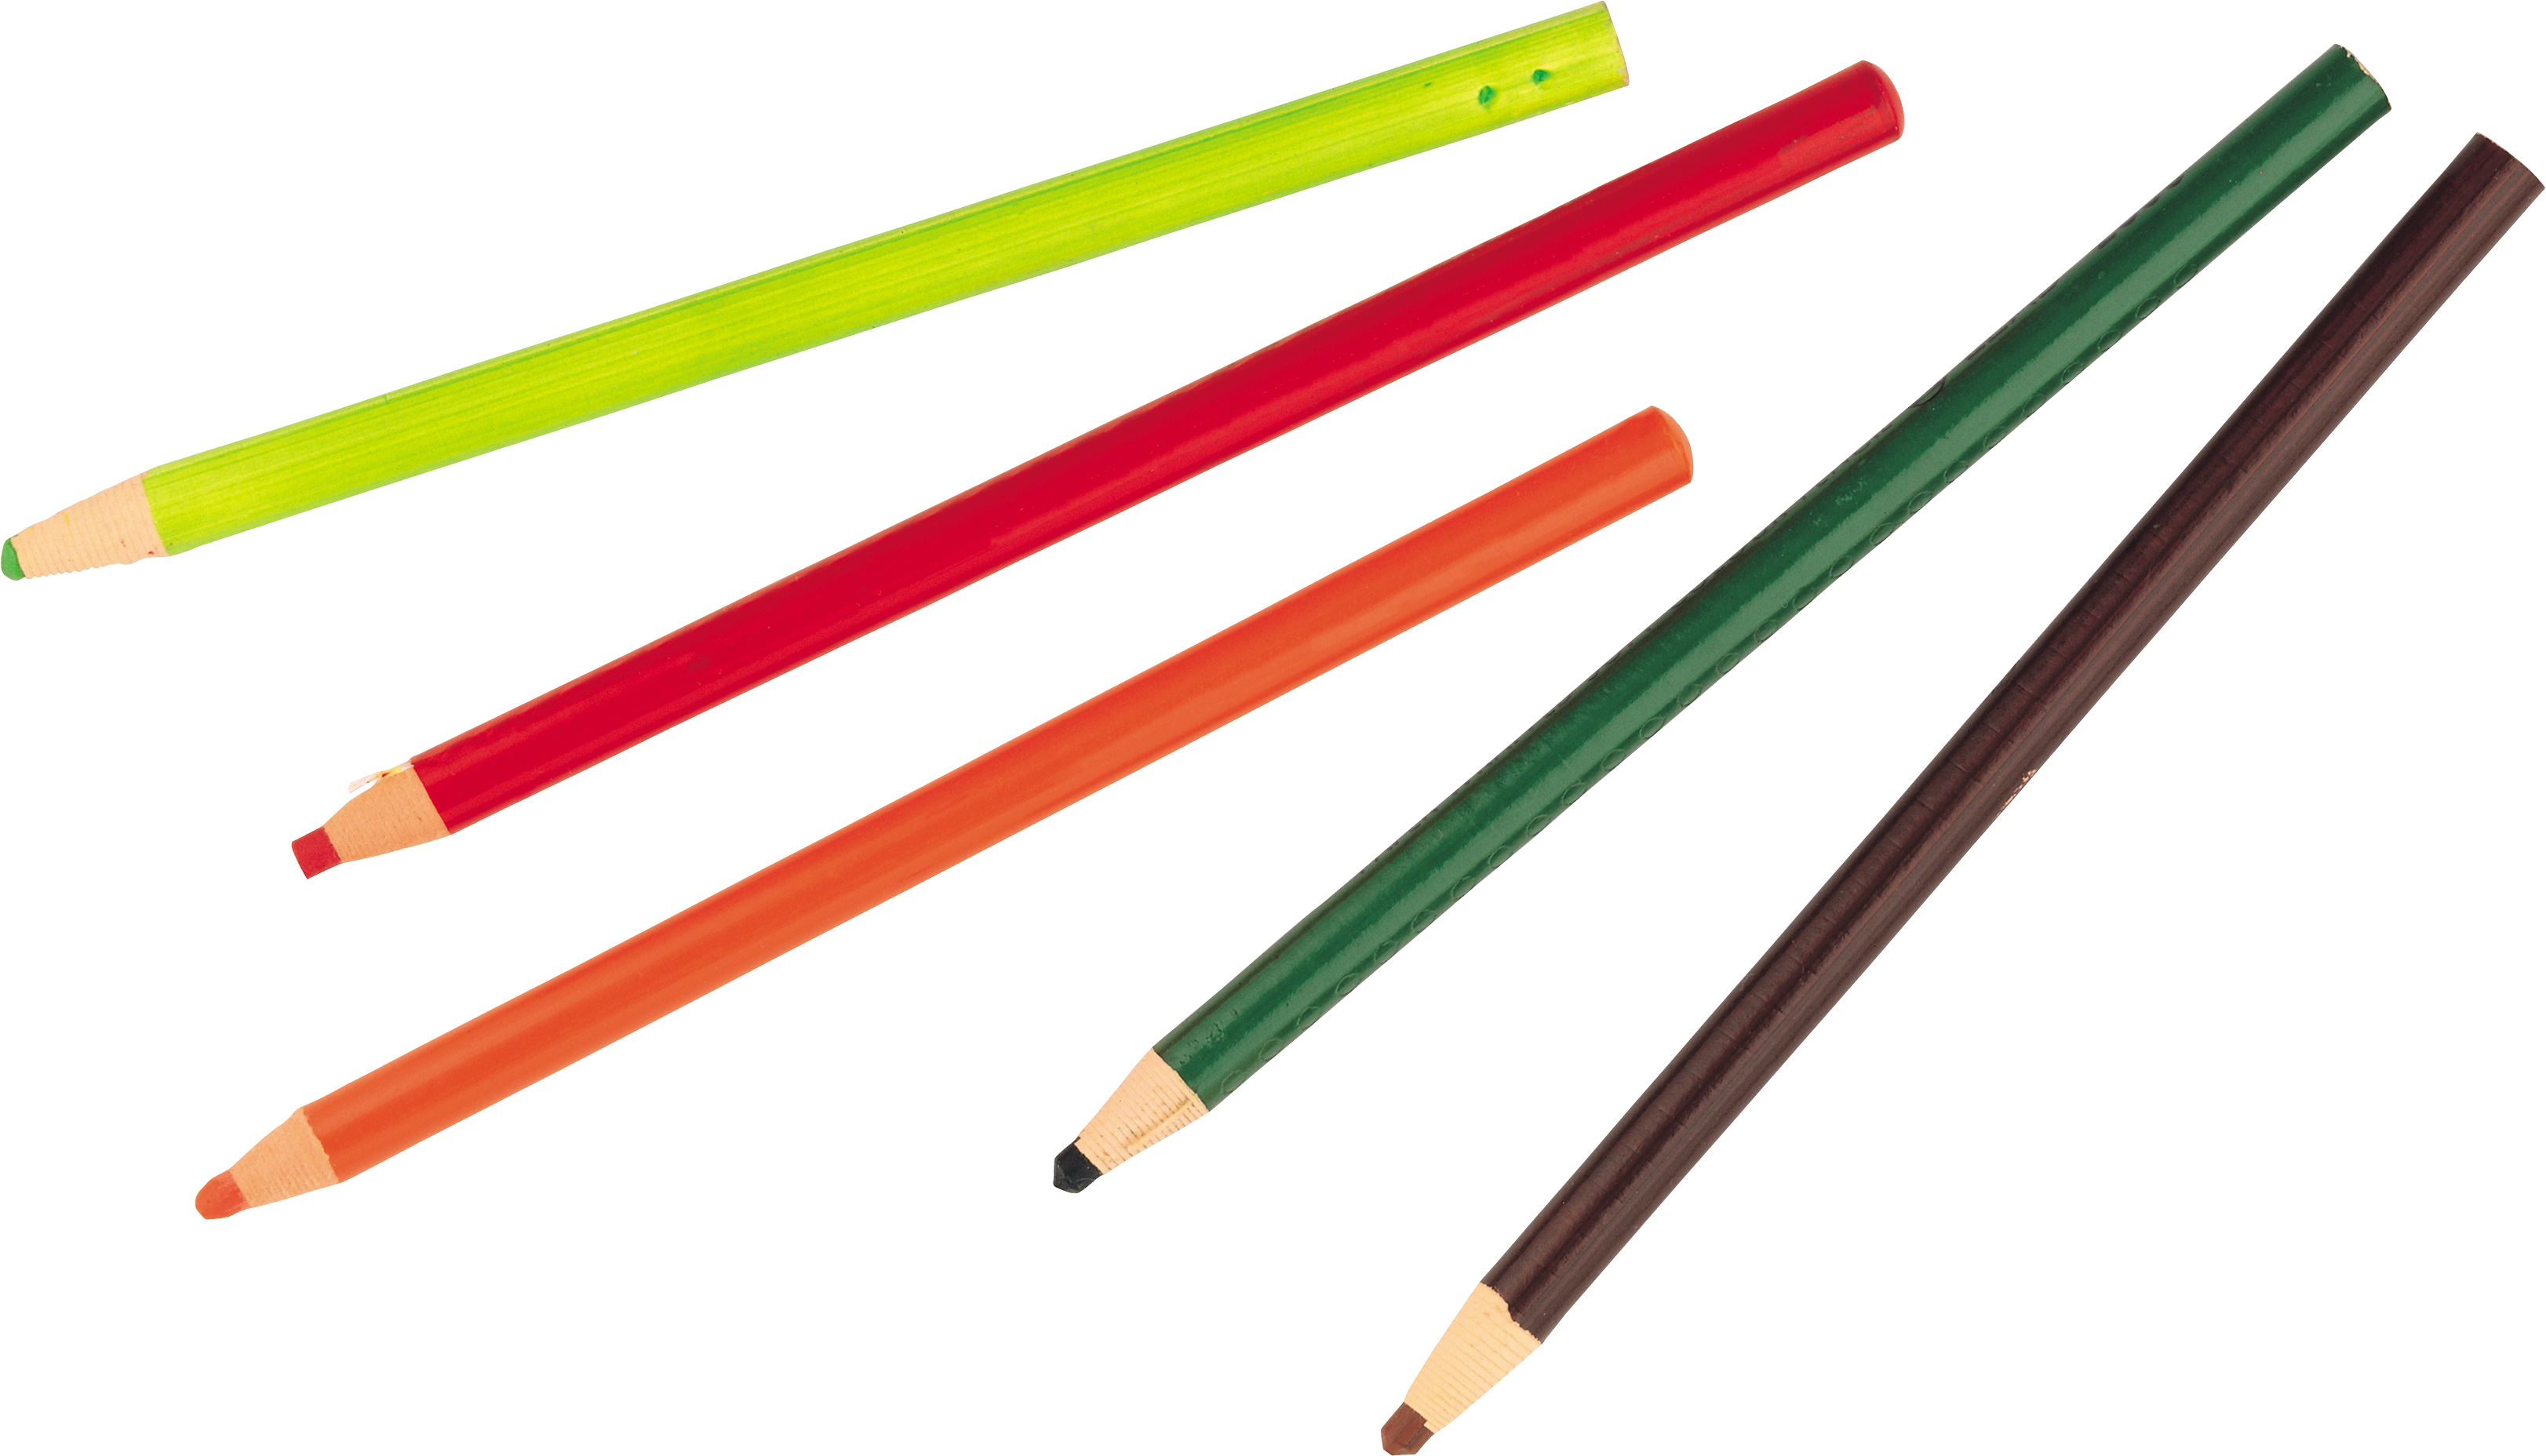 Color Pencils Png Image Purepng Free Transparent Cc0 Png Image Library